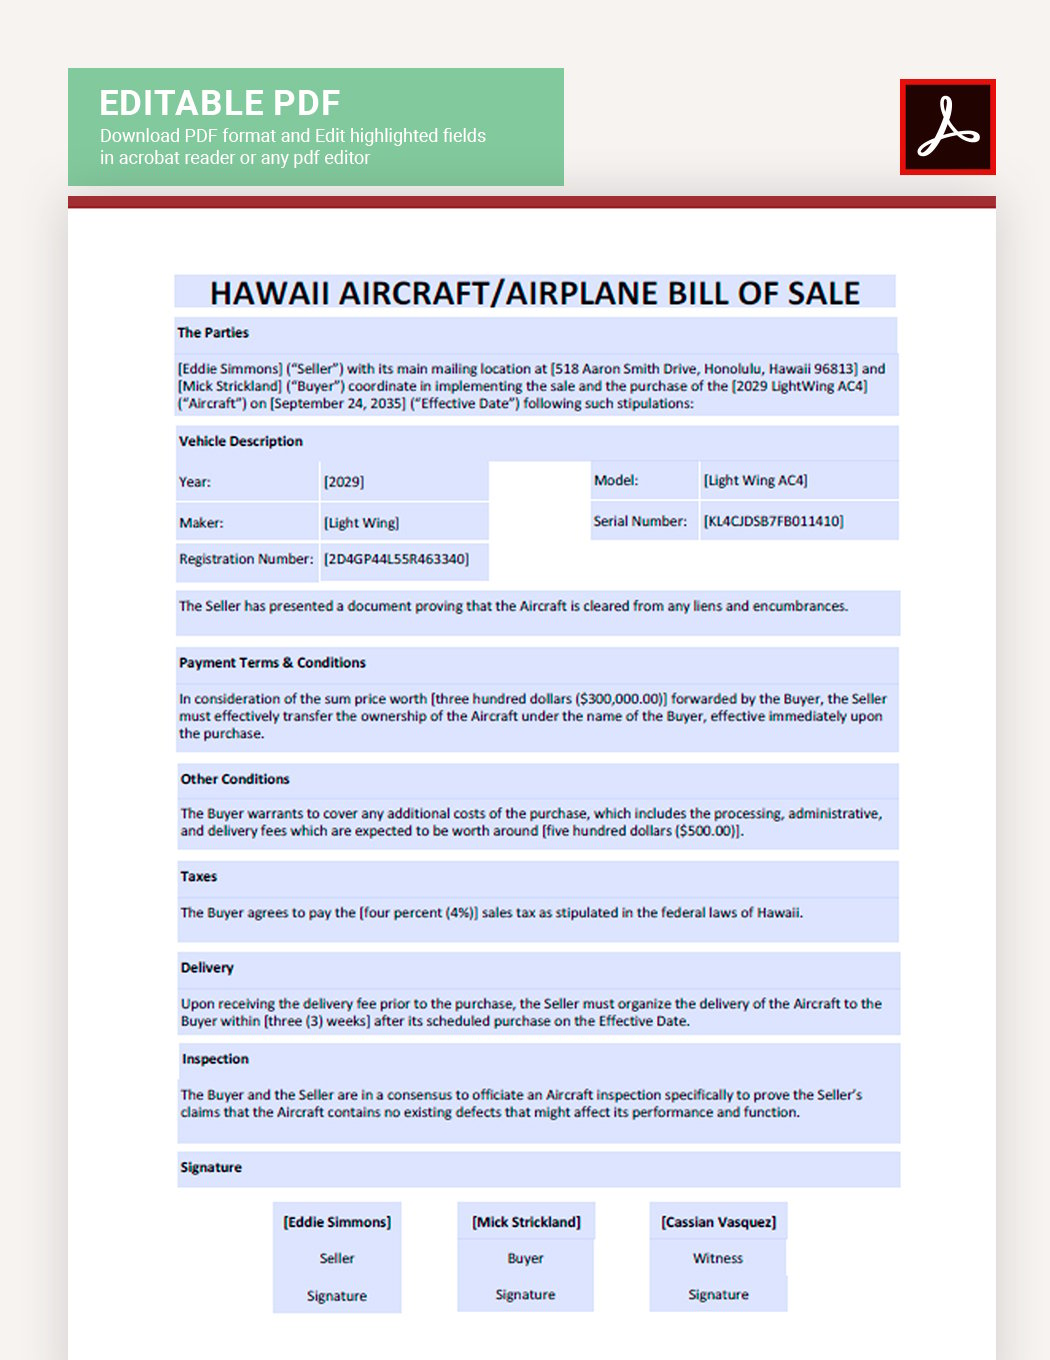 Hawaii Aircraft / Airplane Bill of Sale Template